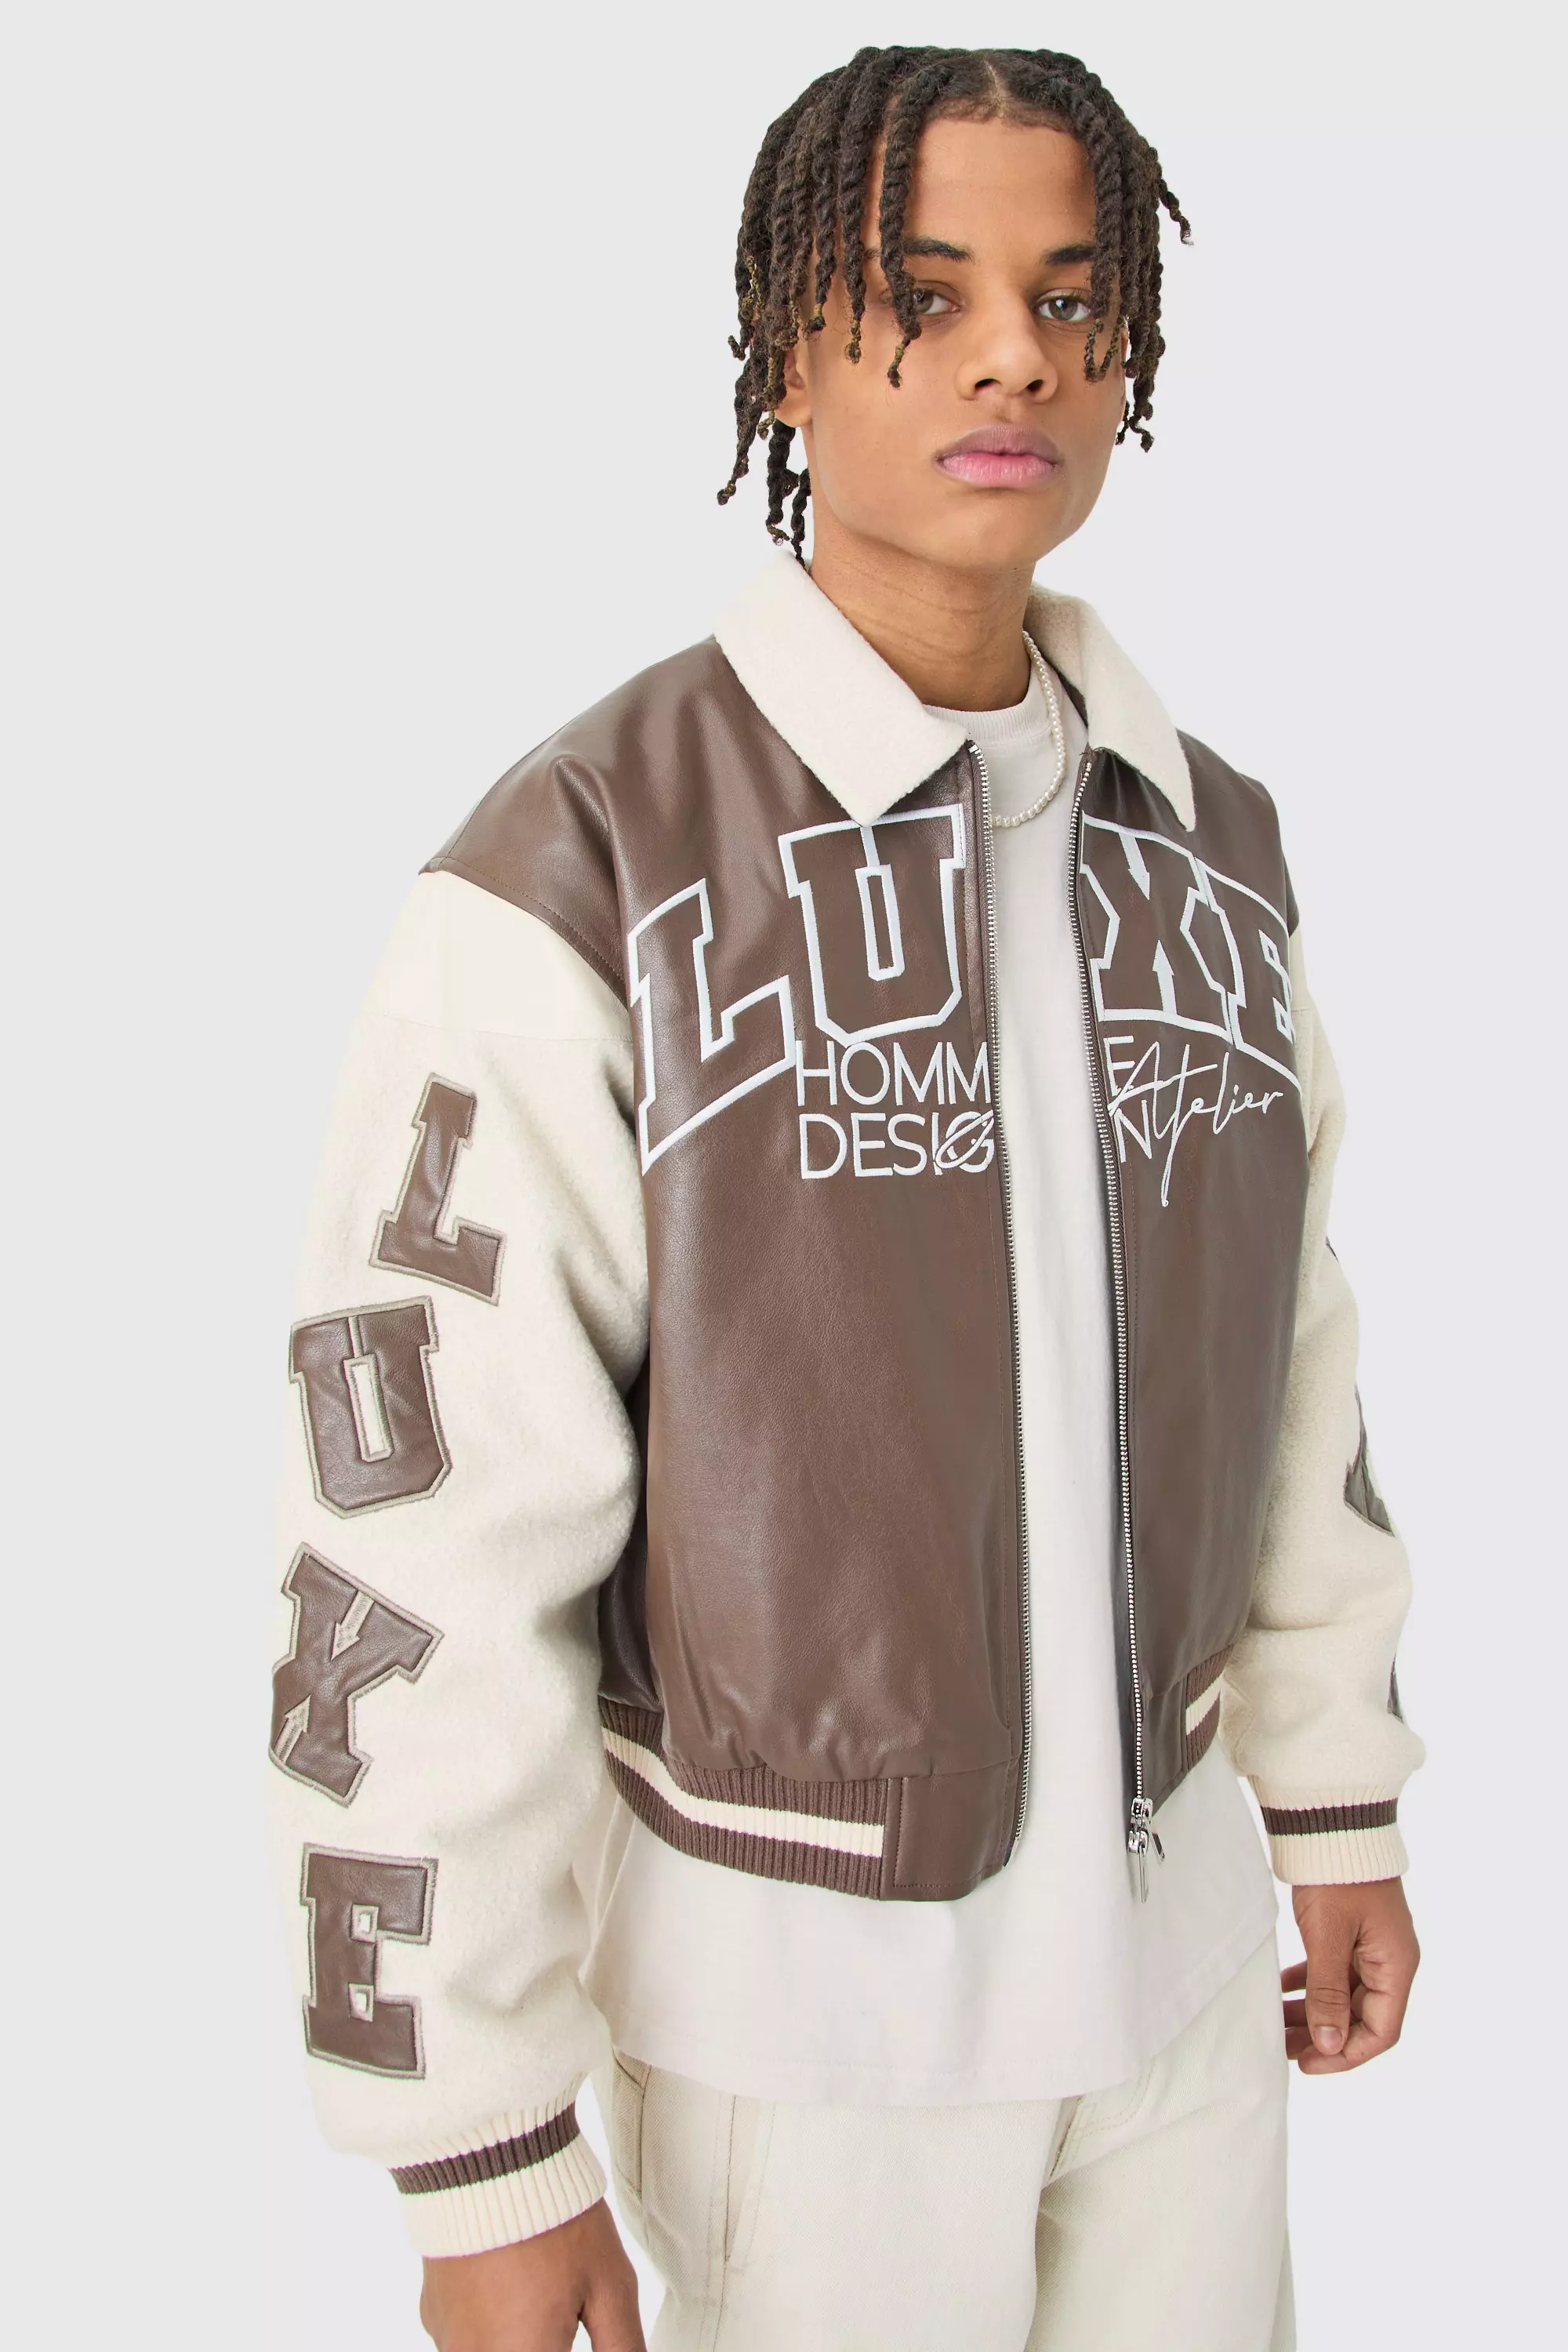 Leather jacket Louis Vuitton X NBA Black size M International in